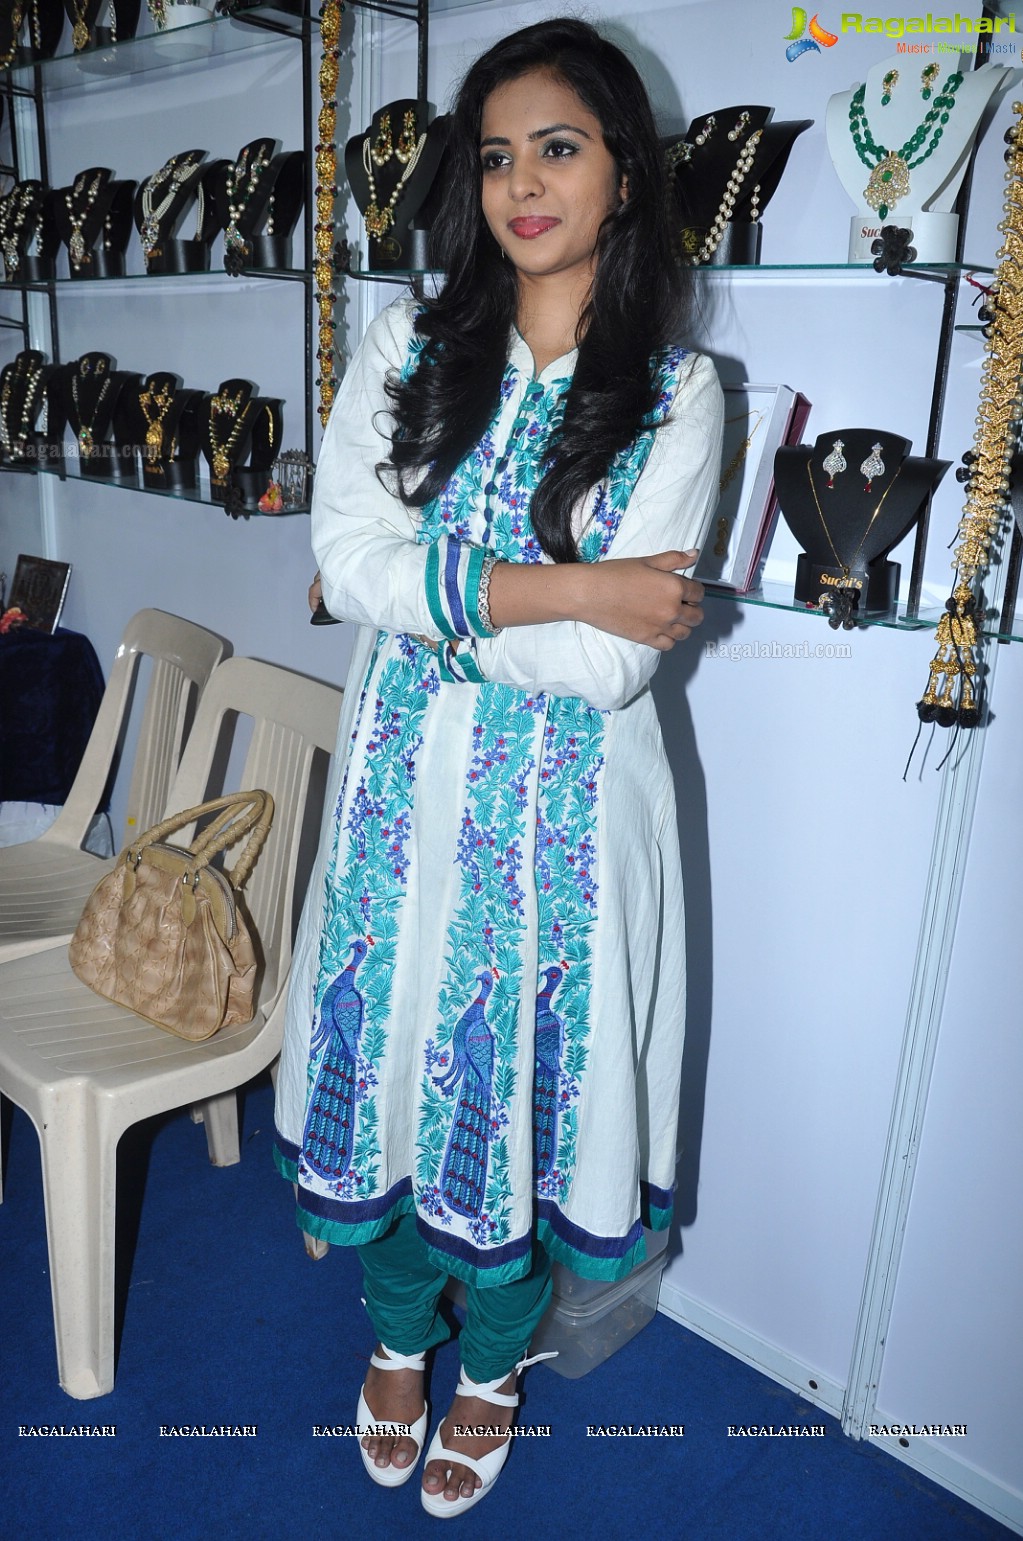 Parinaya Wedding Fair (September 2012), Hyderabad